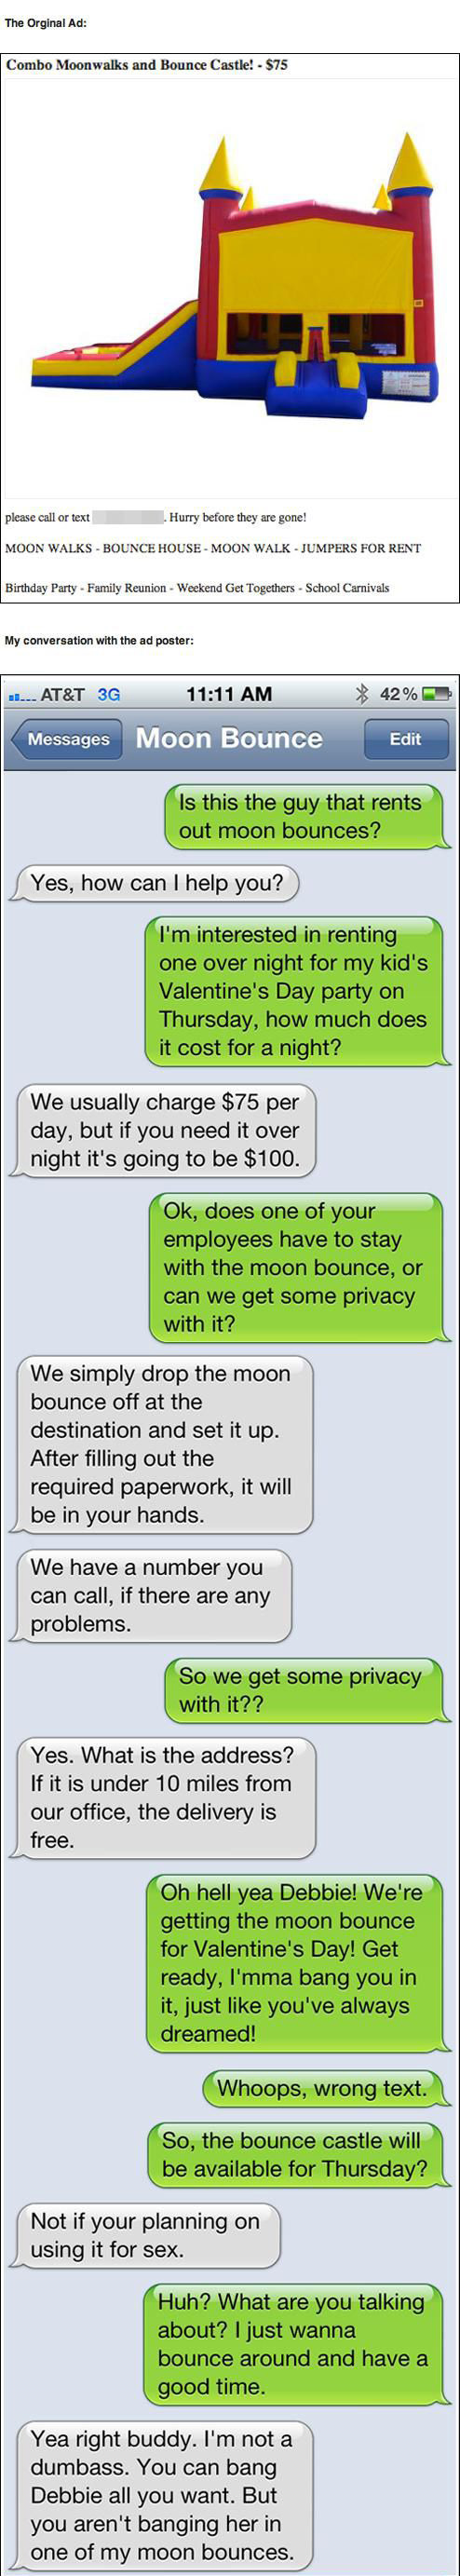 Moon Bounce